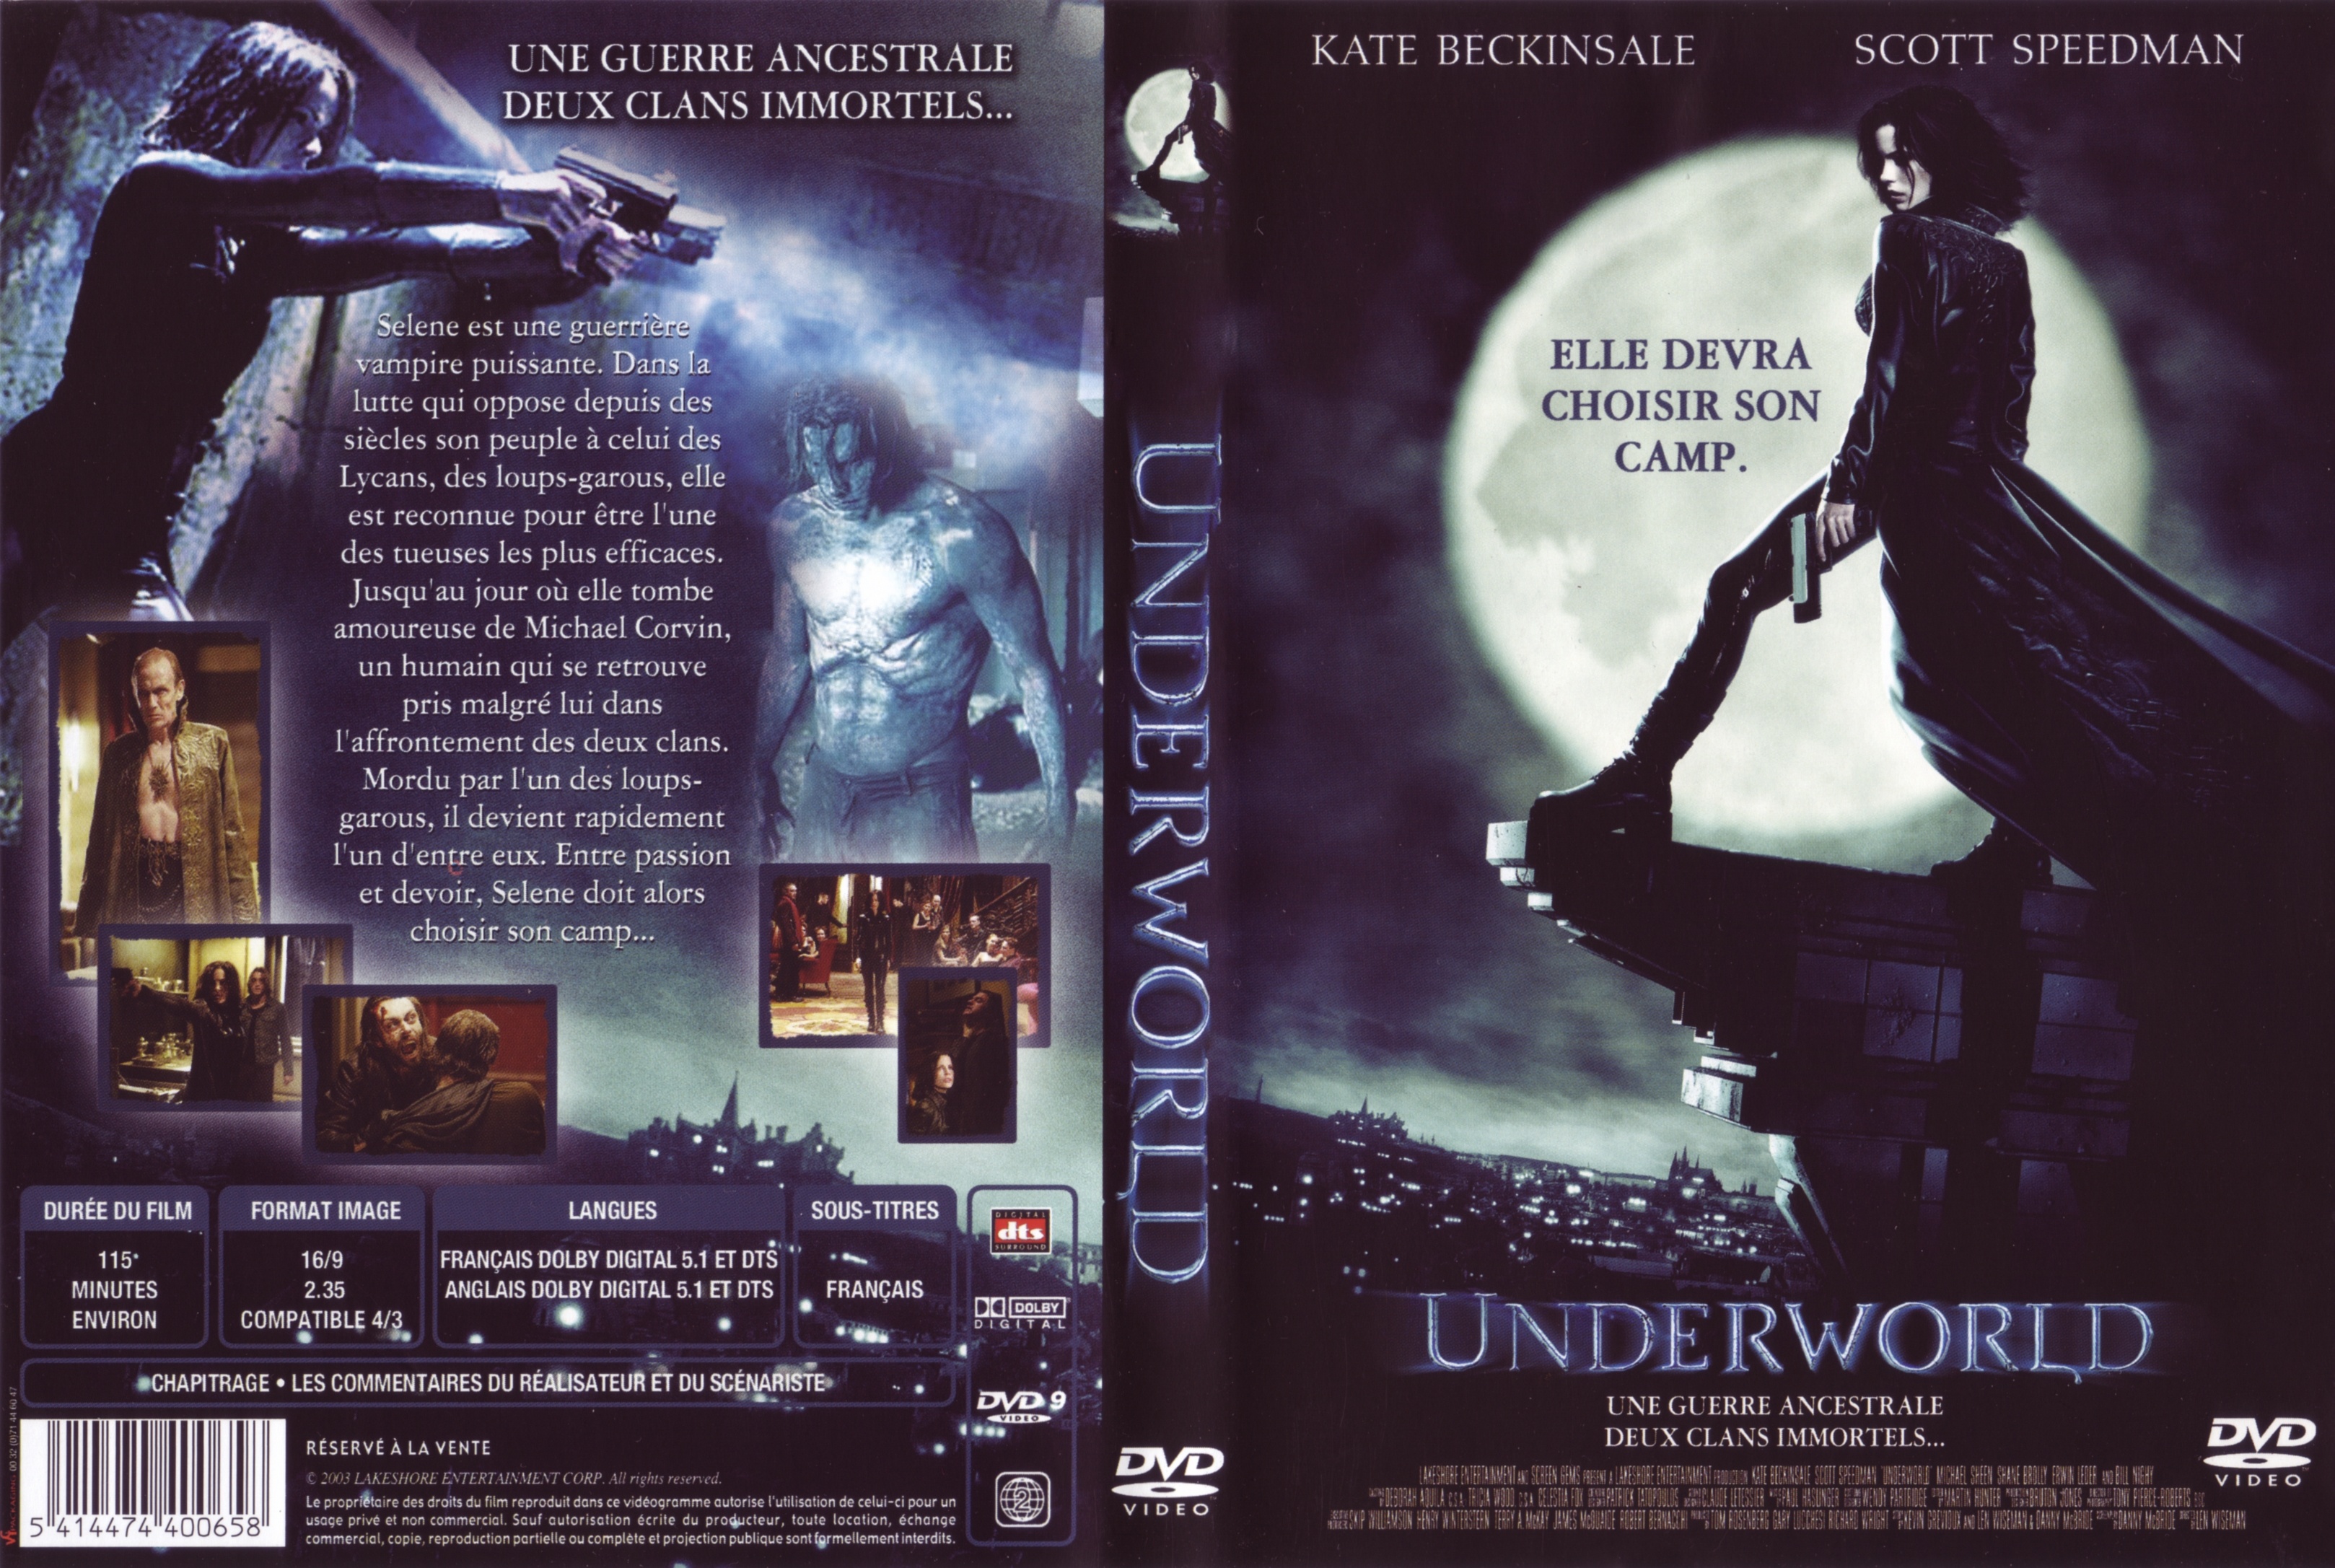 Jaquette DVD Underworld v4